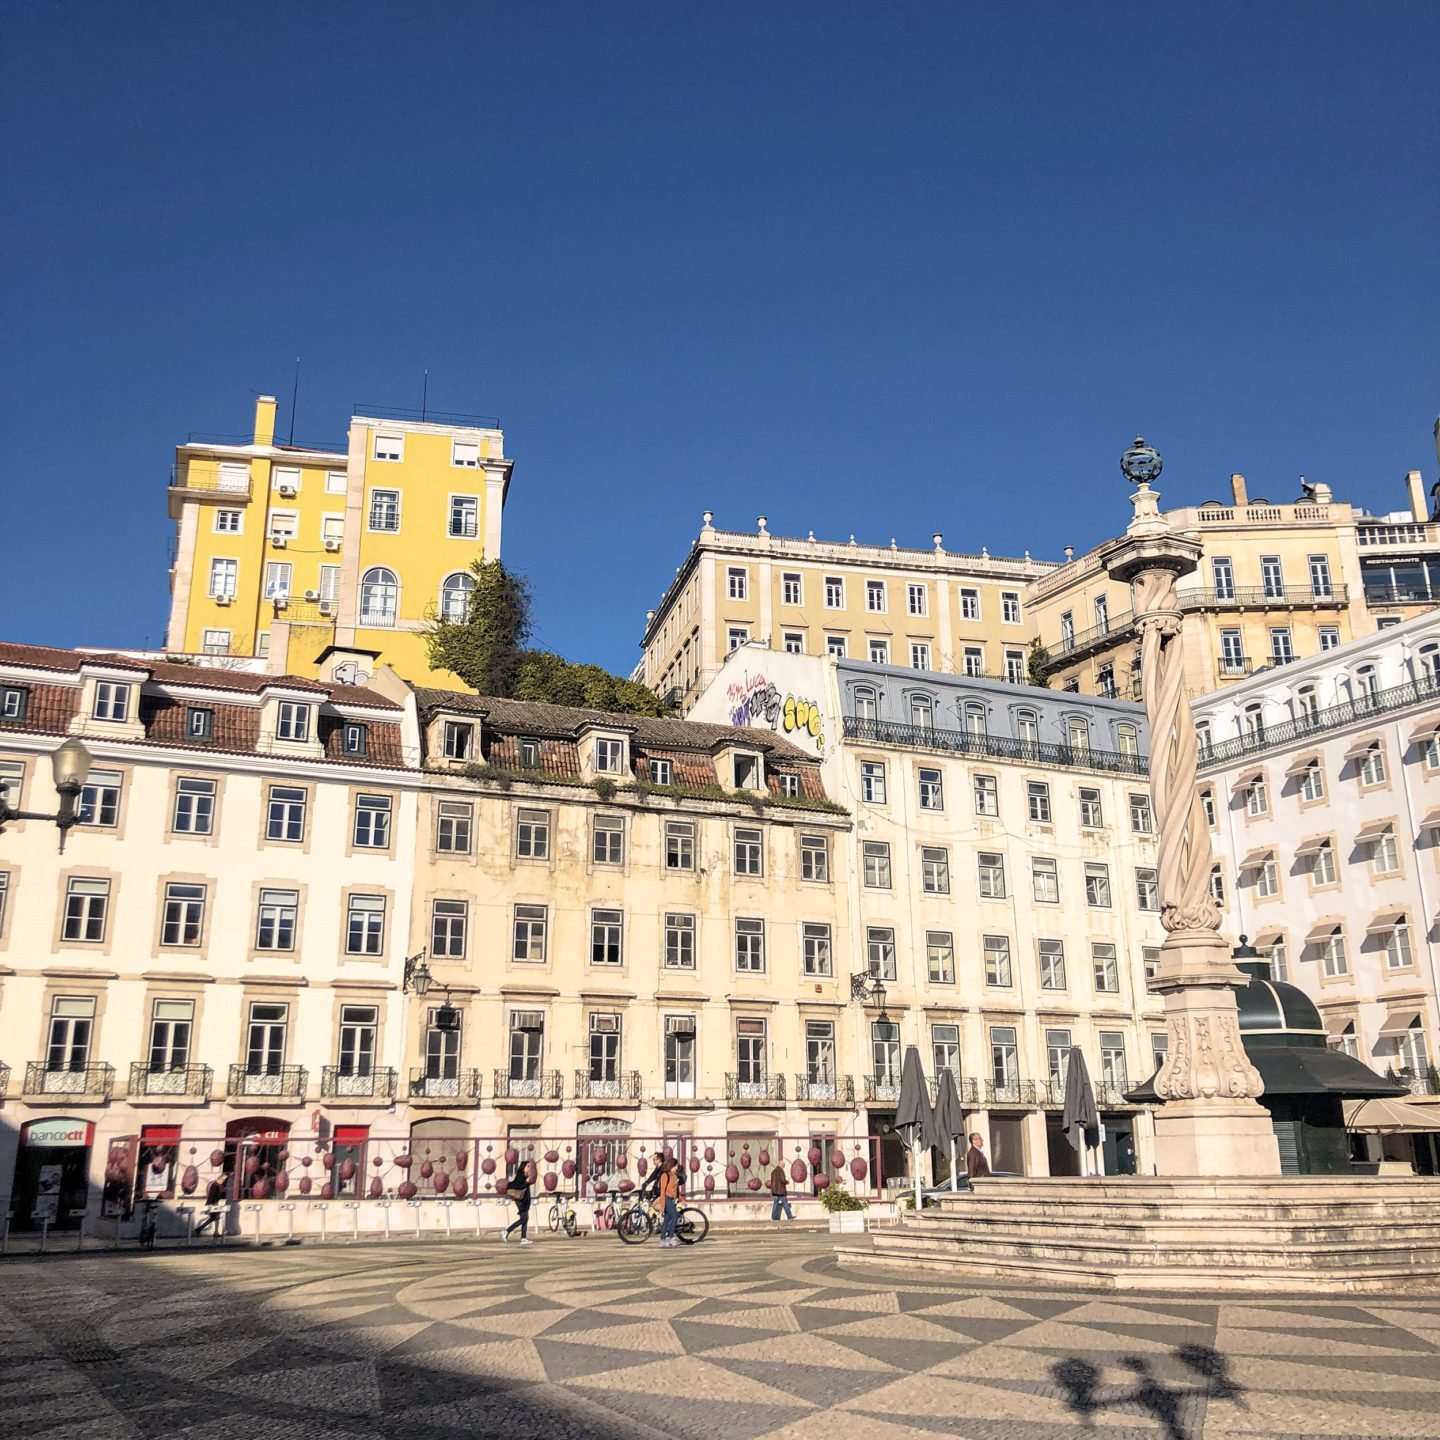 Downtown Square Lisbon